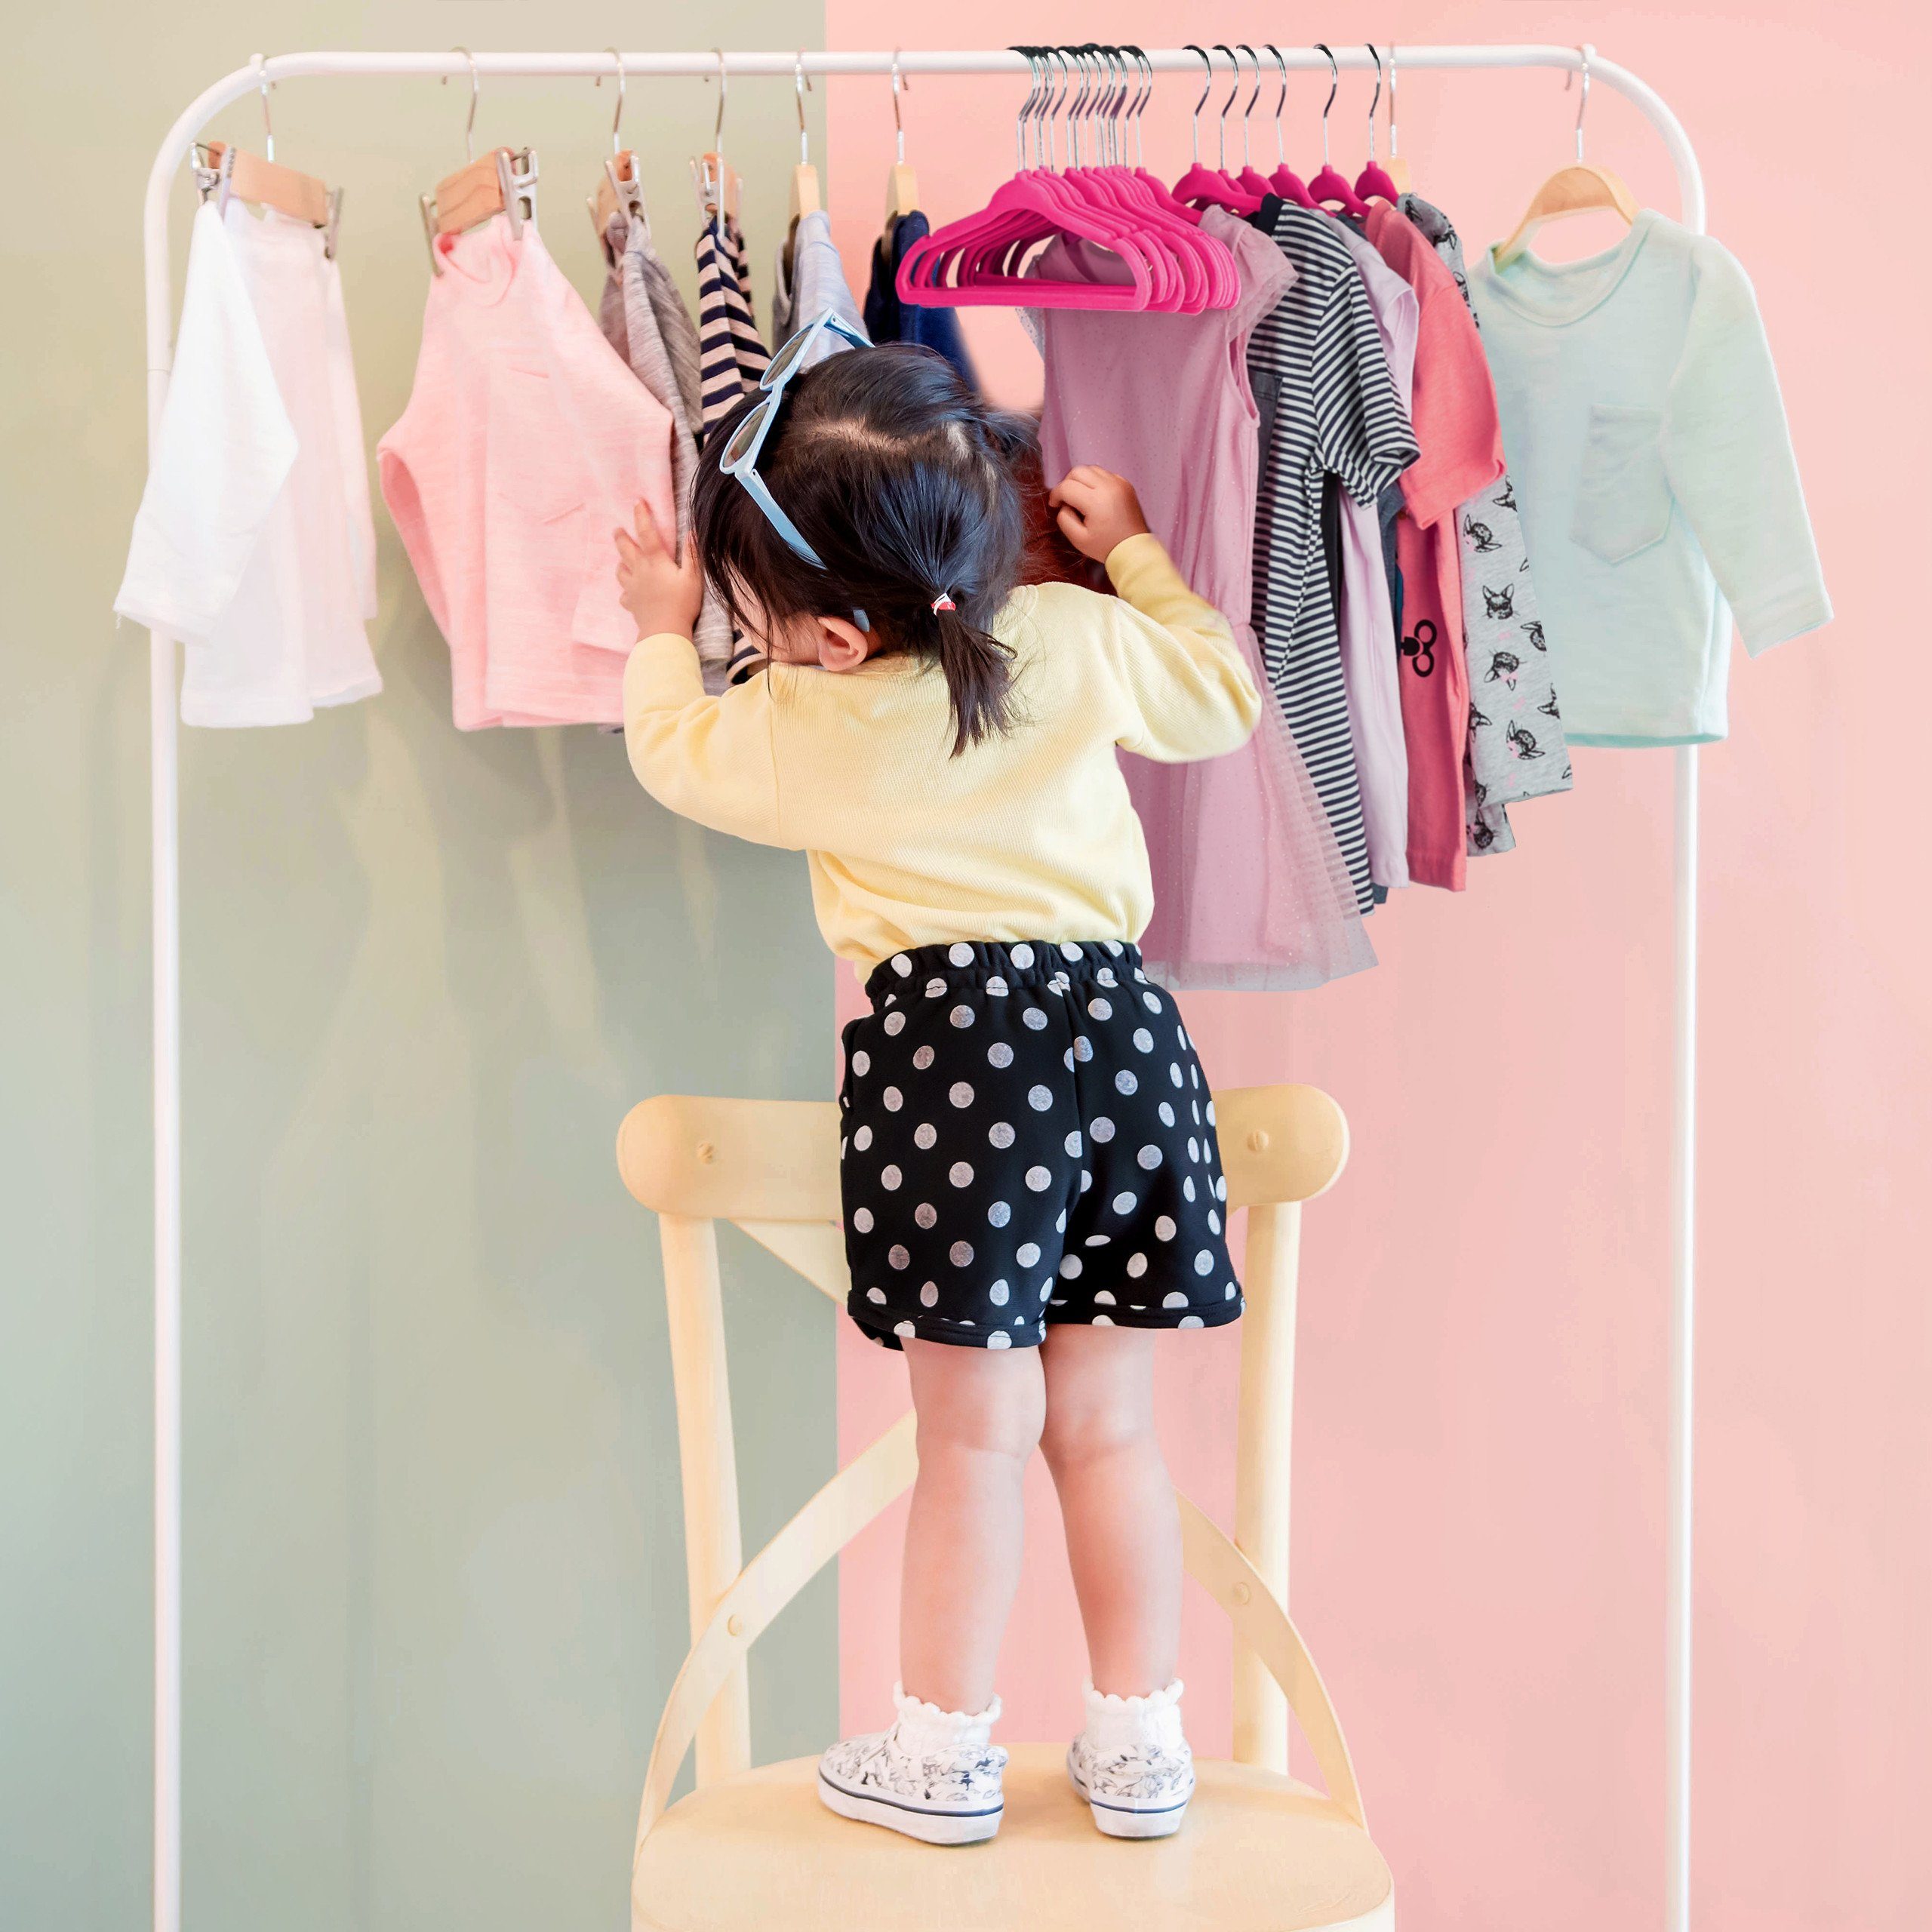 Kinder x 60 relaxdays pink Kleiderbügel Kleiderbügel